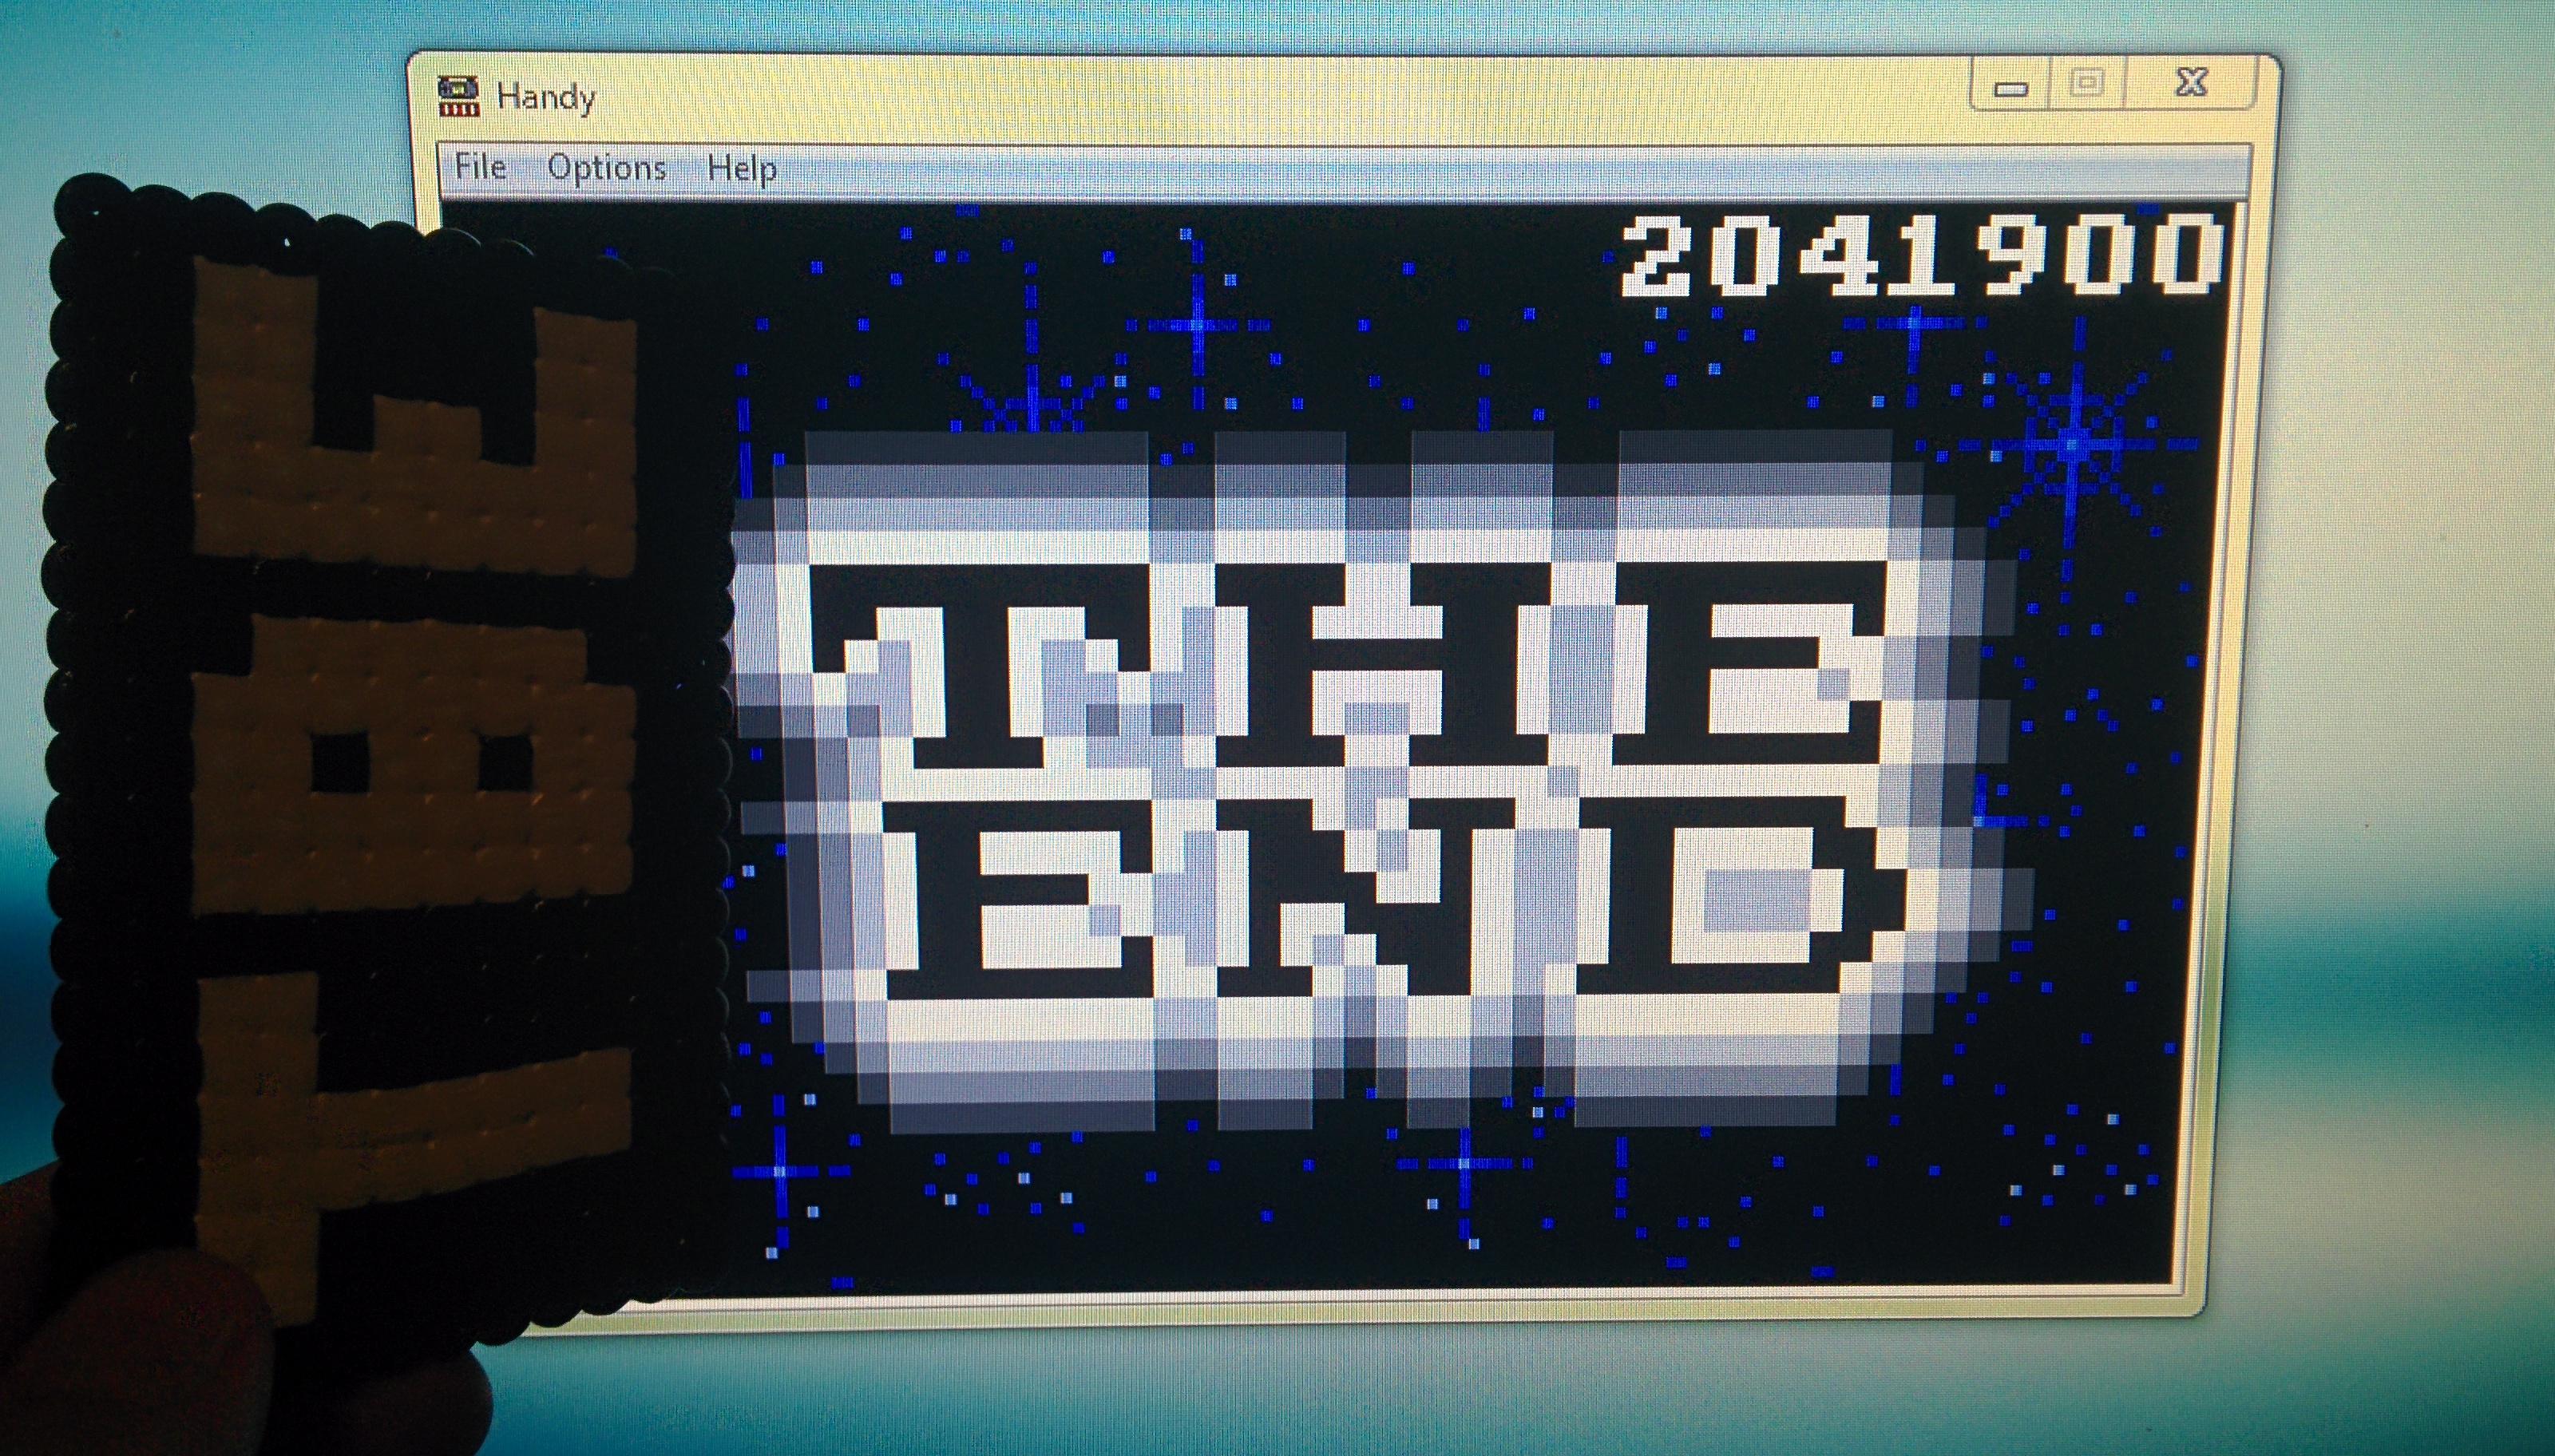 Sixx: Gates of Zendocon (Atari Lynx Emulated) 2,041,900 points on 2014-10-11 17:34:28